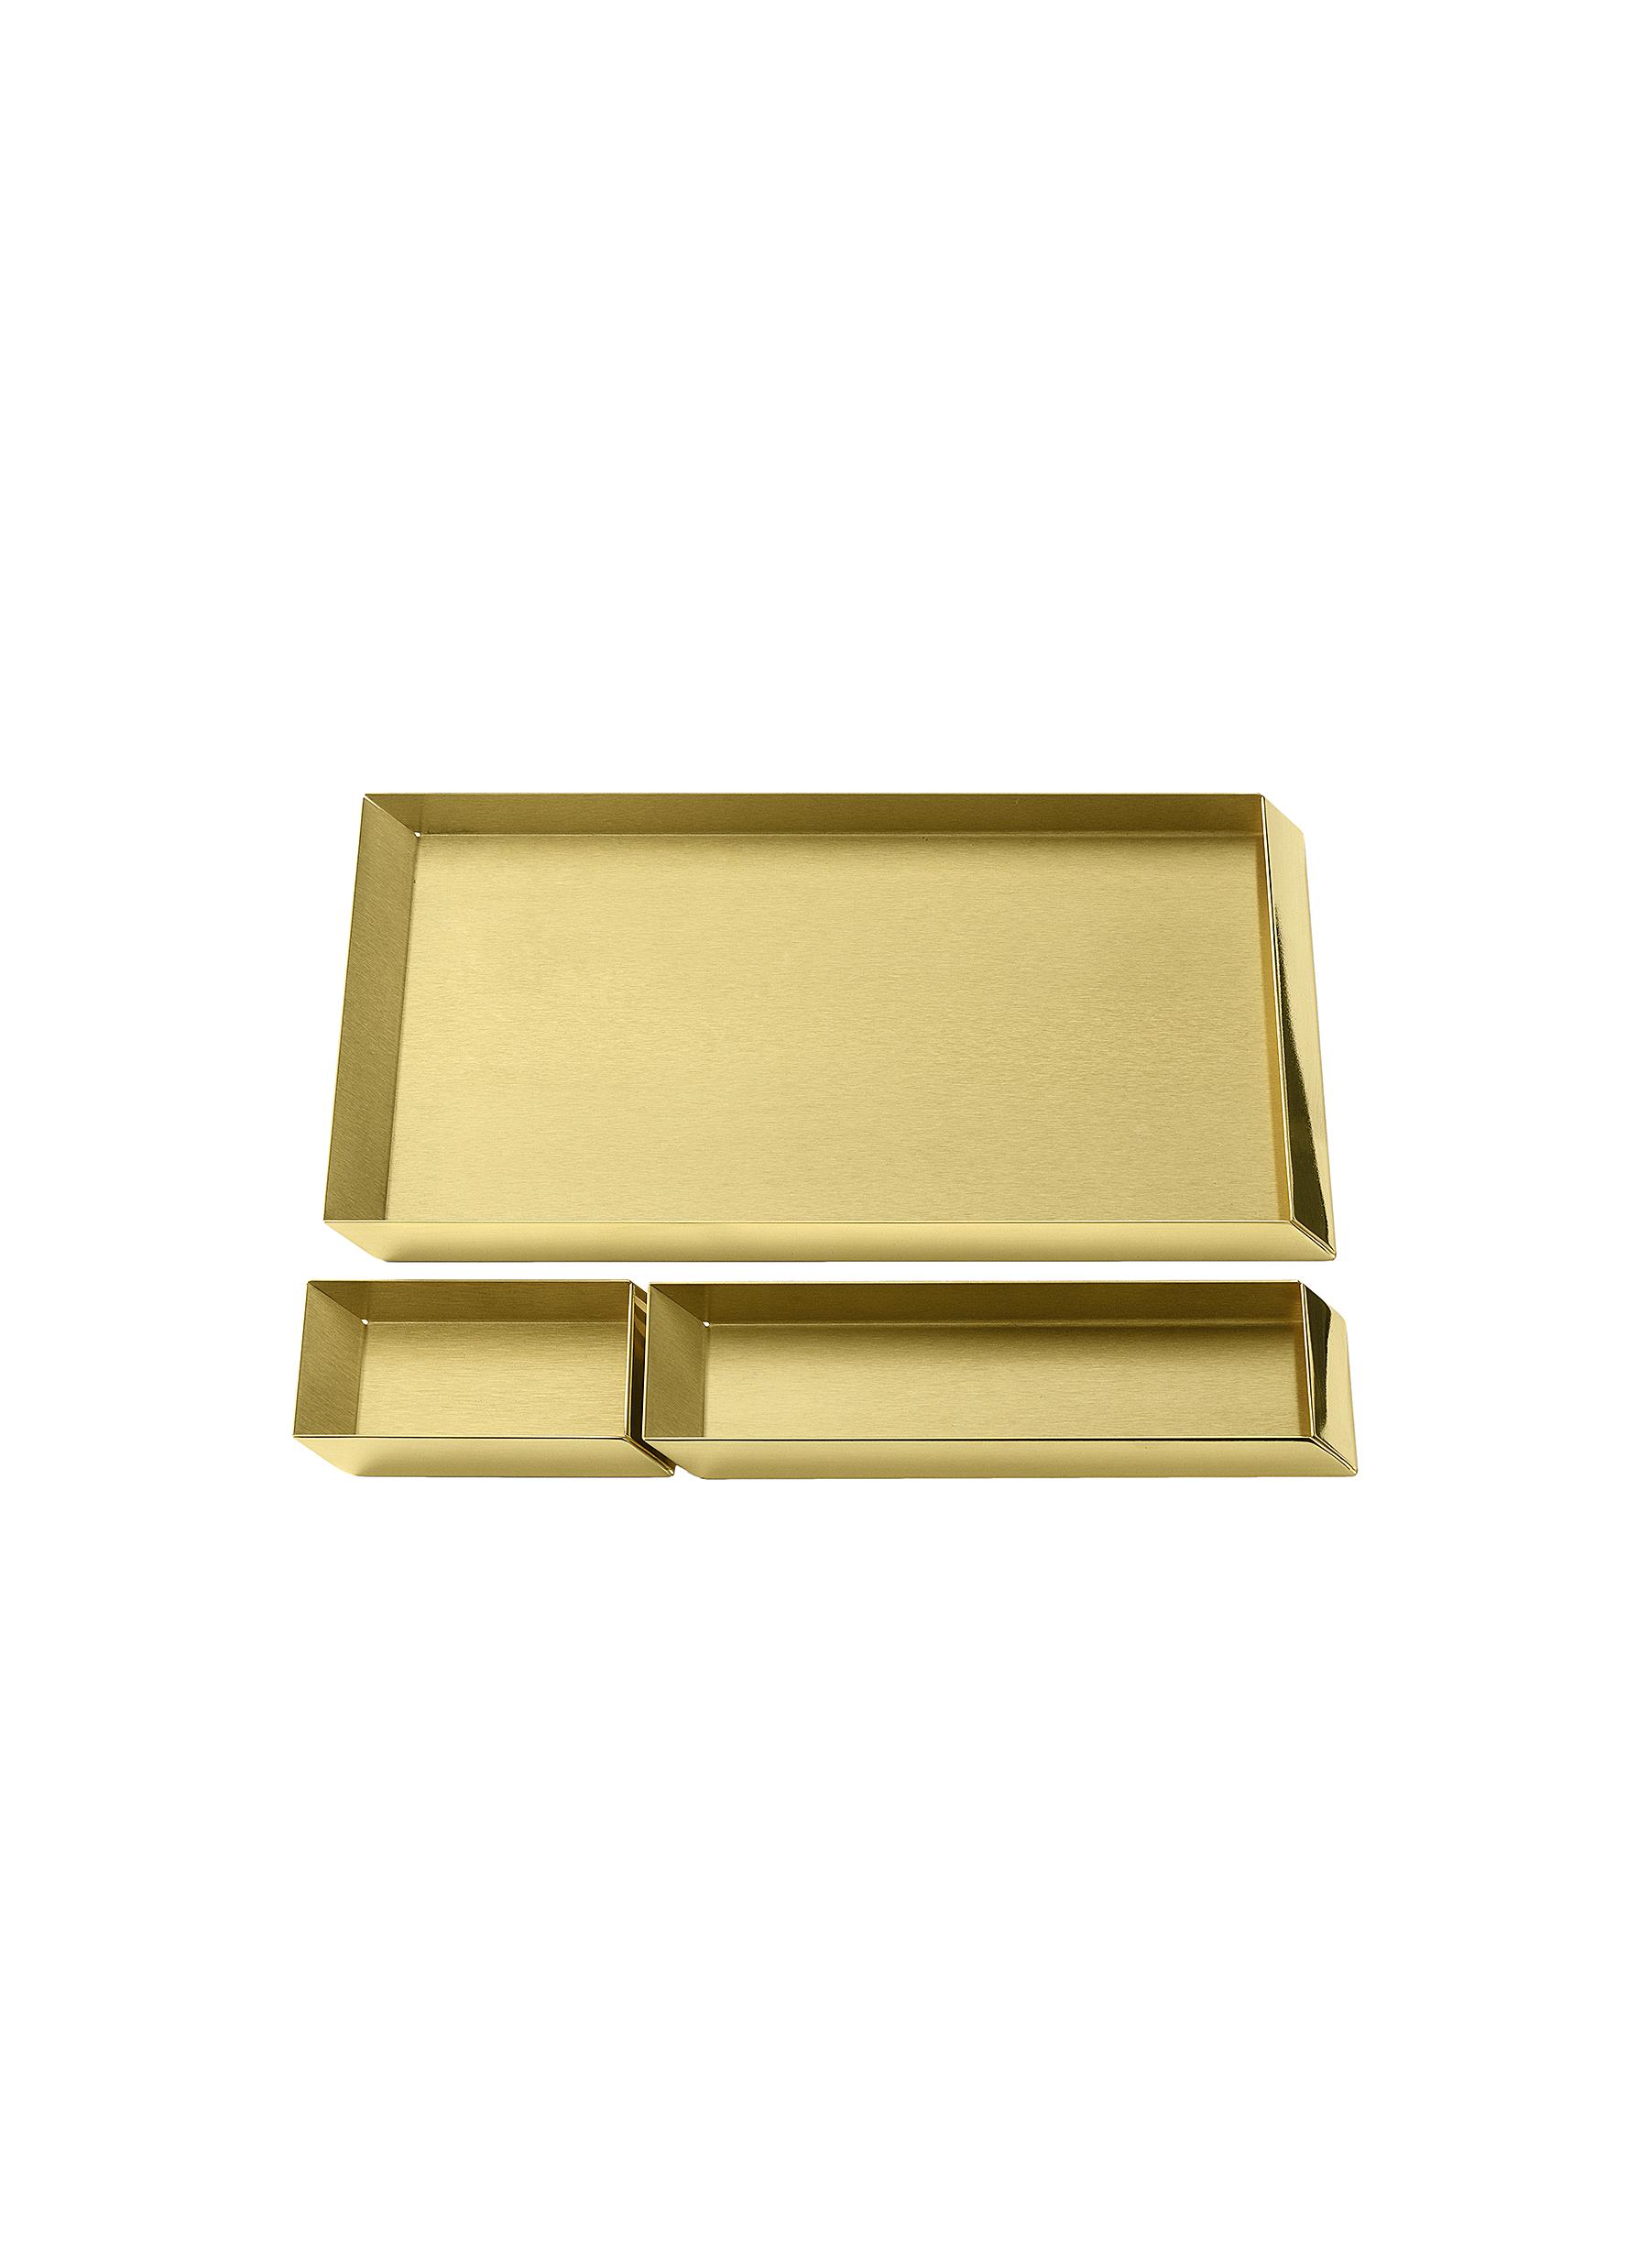 Ghidini Axonometry Desk Trays Set - Polished Brass